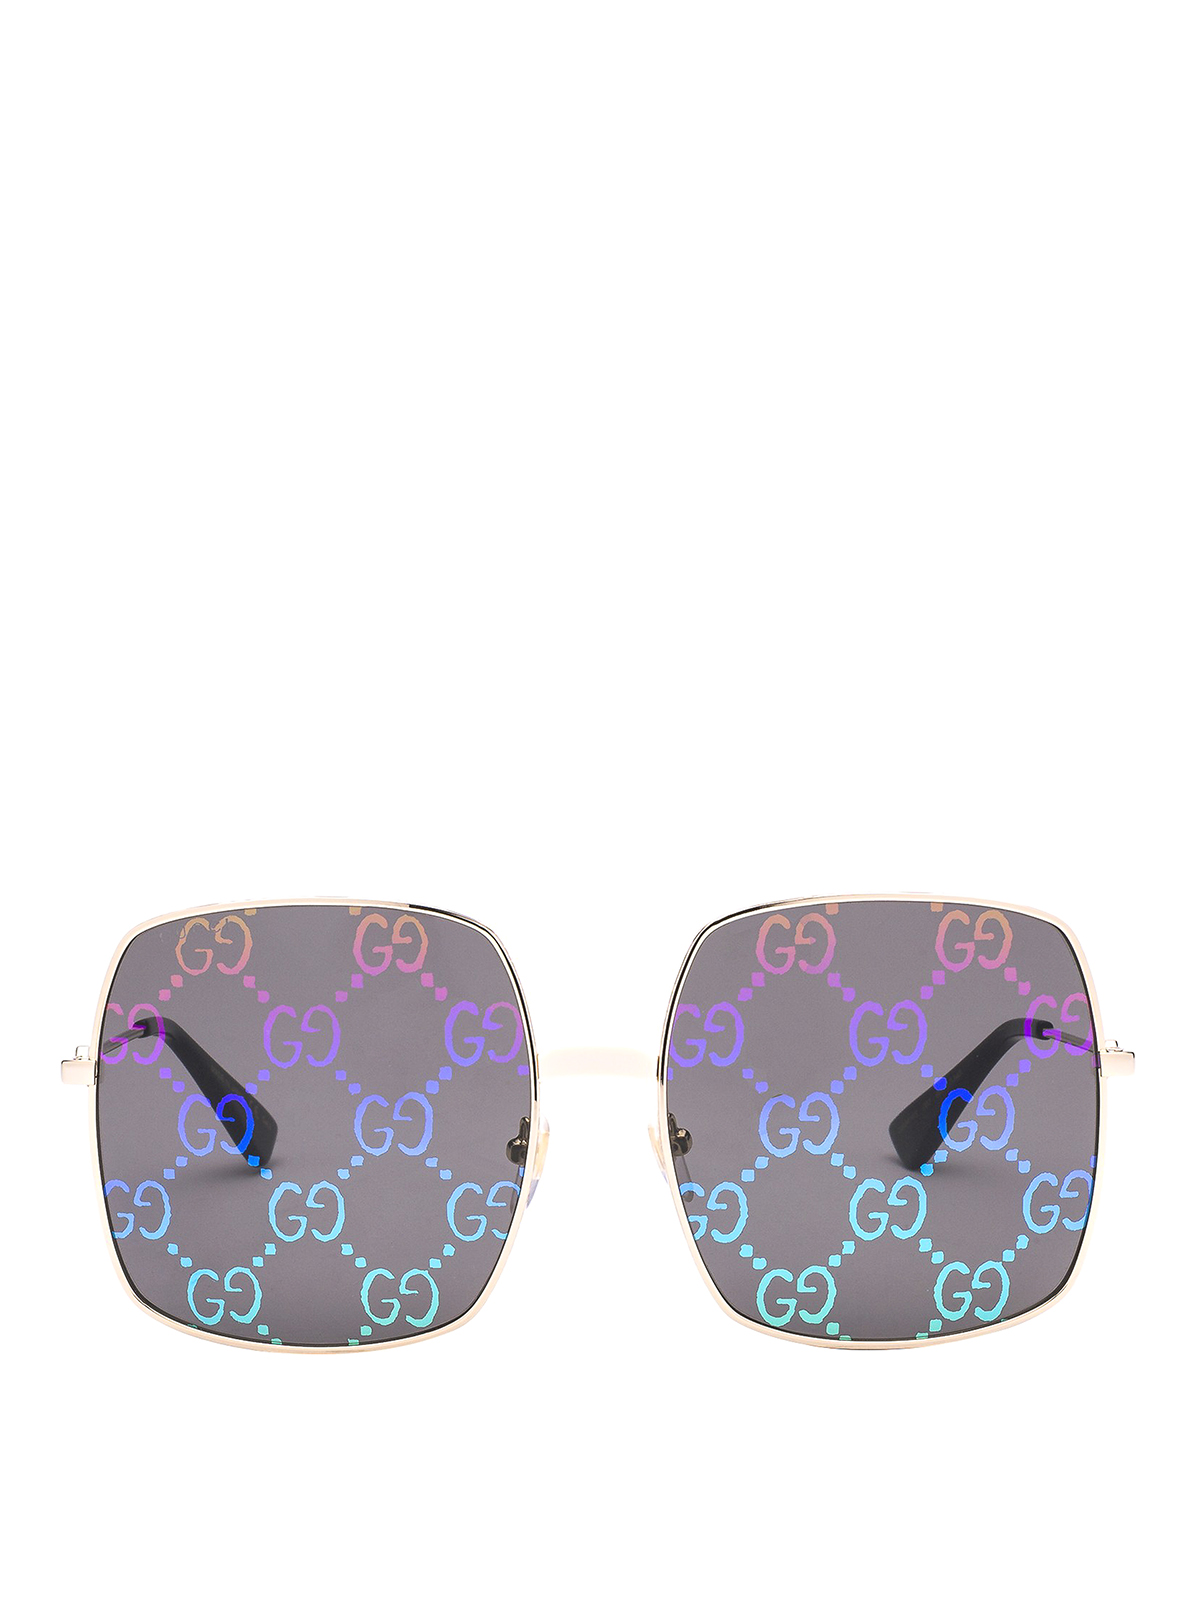 Rainbow GG patterned lenses sunglasses 